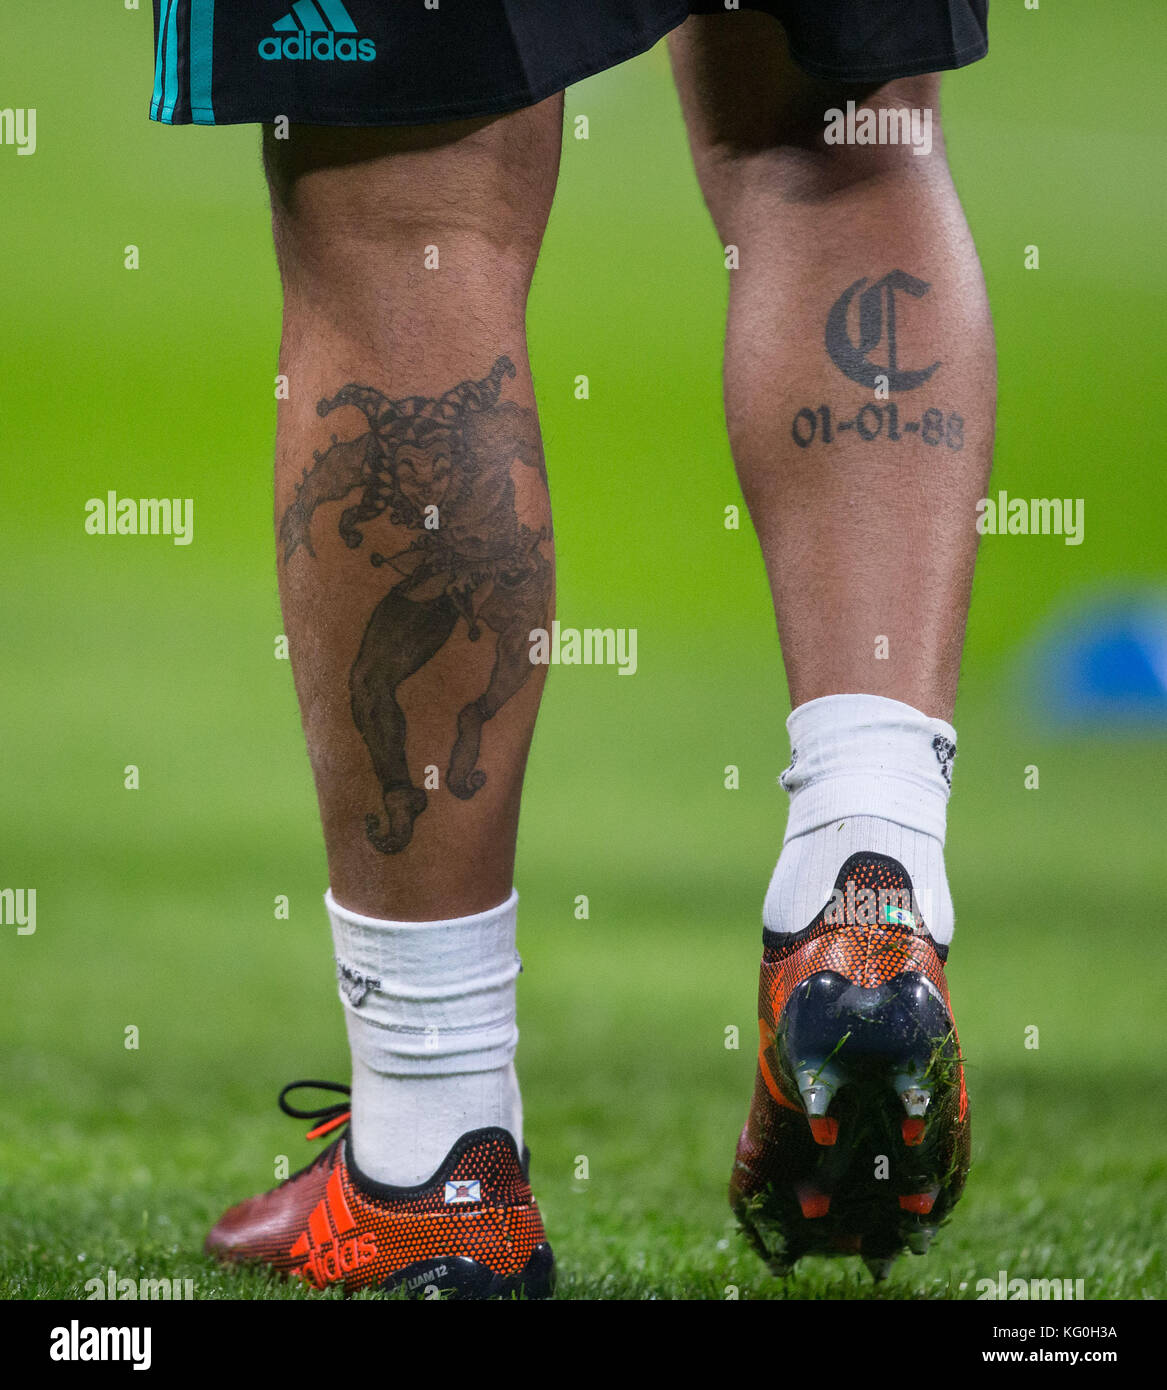 Marcelo of Real Madrid leg tattoos ahead of the UEFA Champions ...